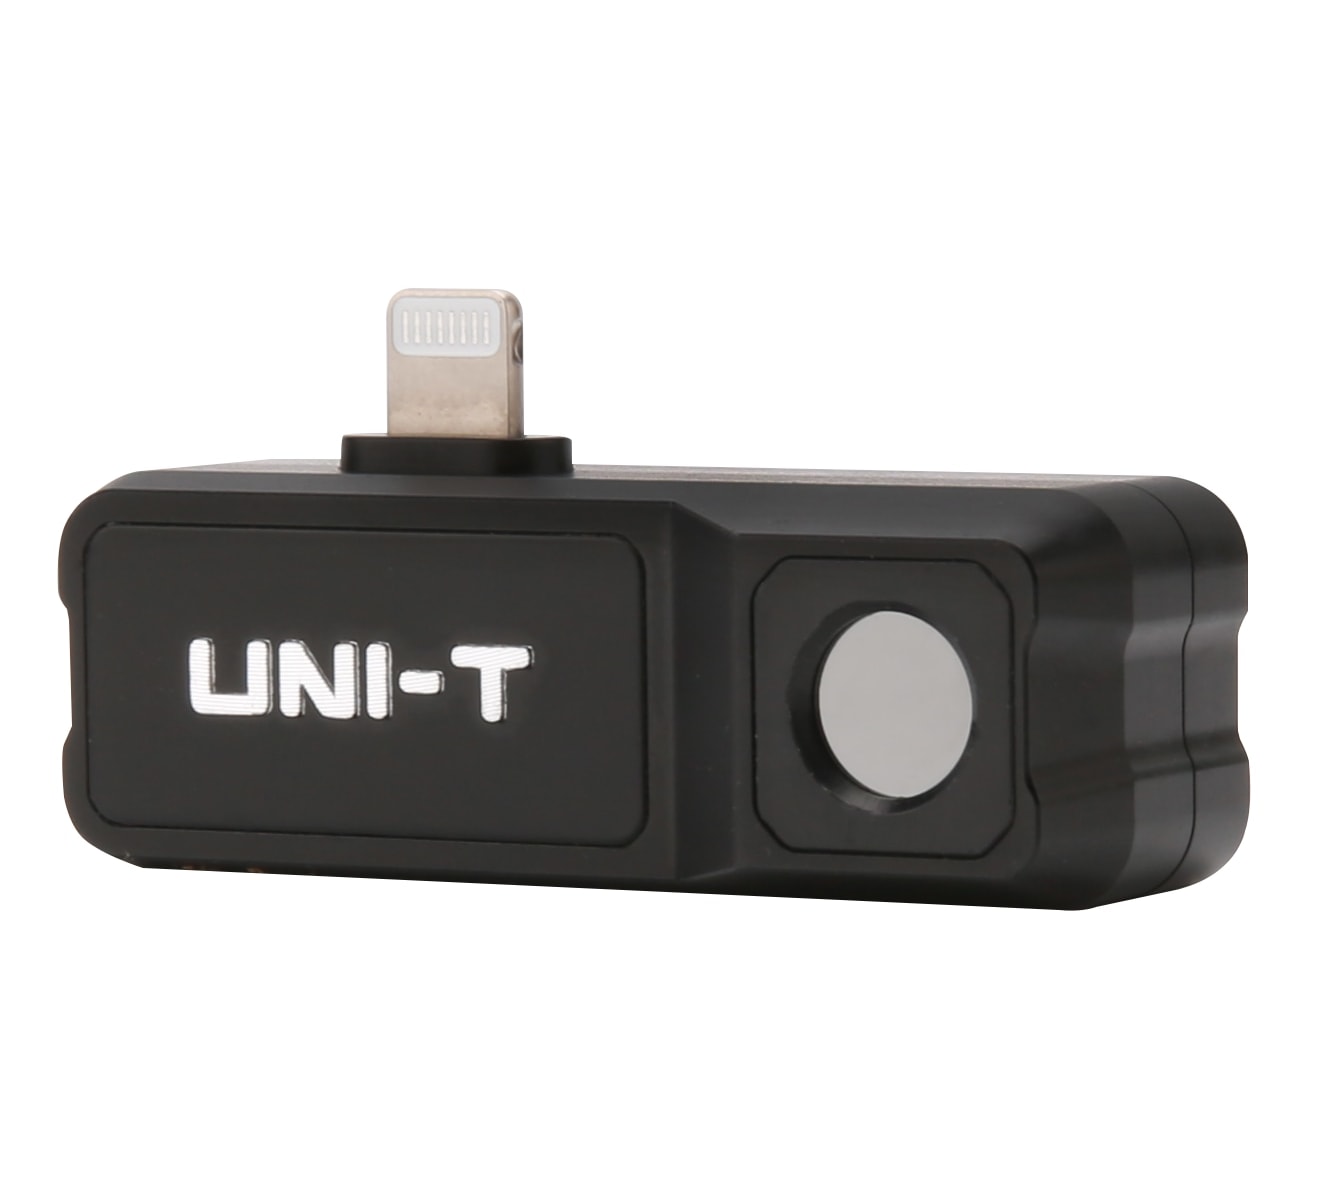 UNI-T Smartphone-Wärmebildkamera UTi120MS für Apple